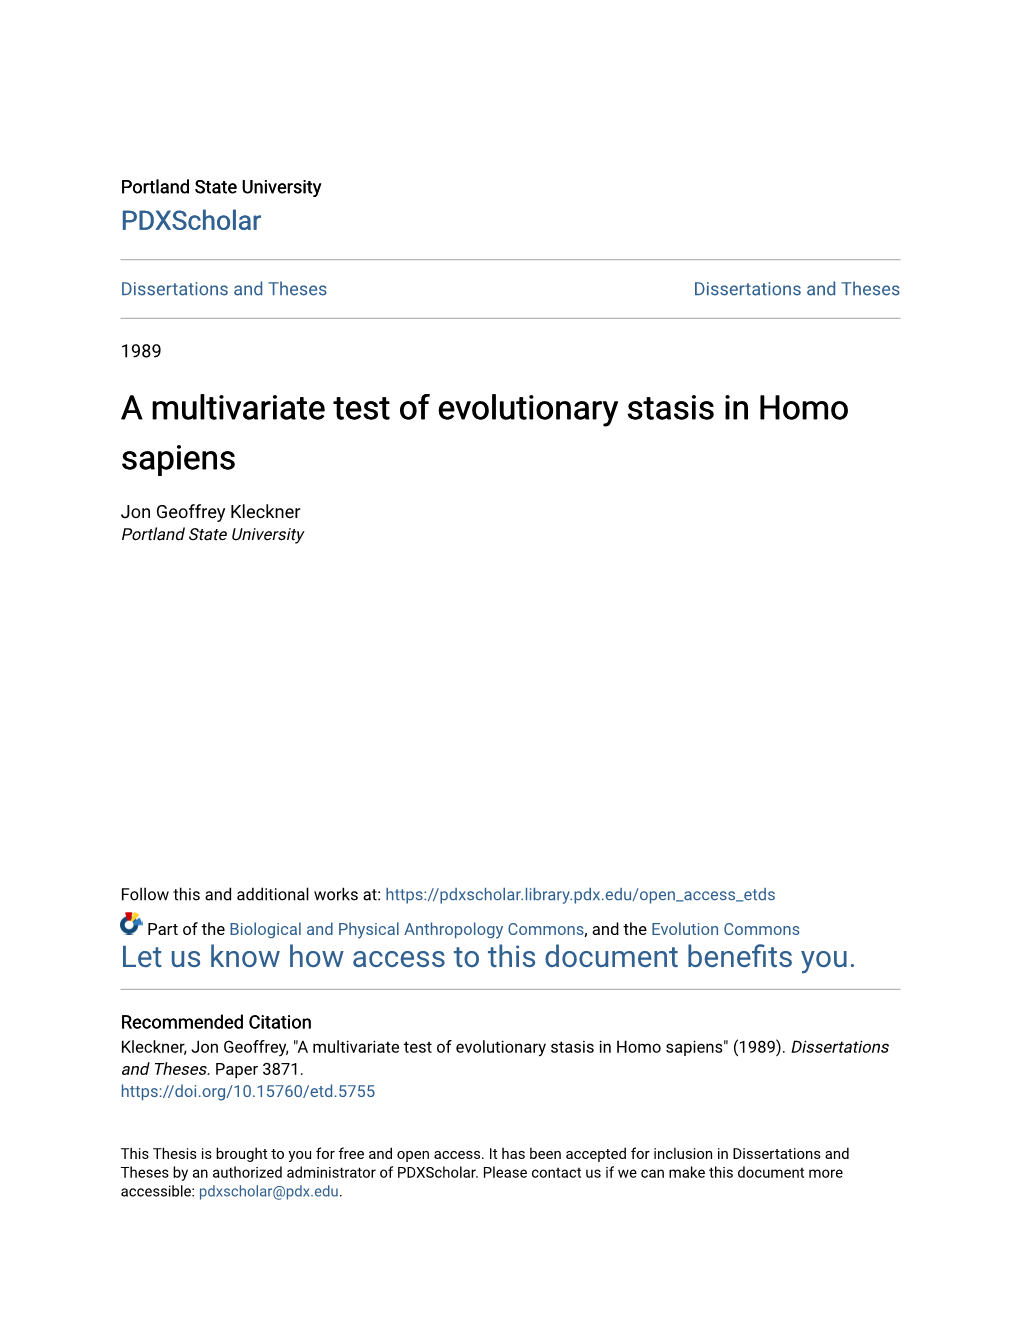 A Multivariate Test of Evolutionary Stasis in Homo Sapiens